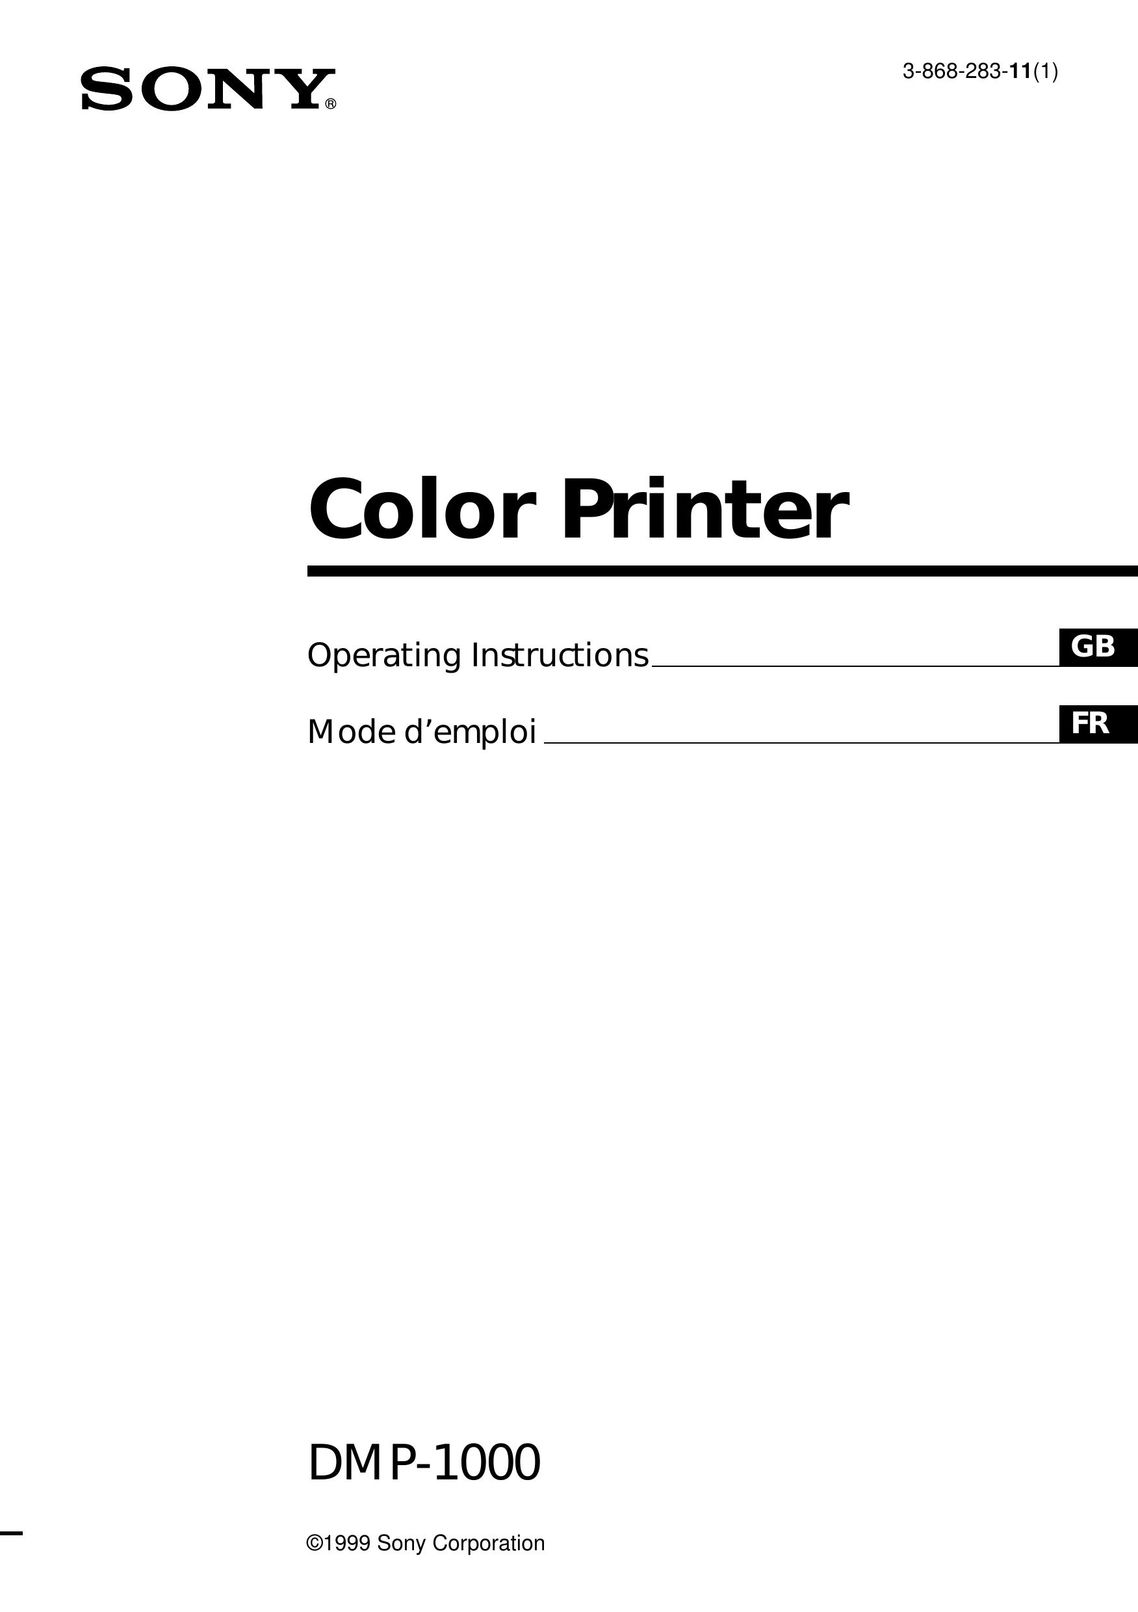 Sony DMP-1000 Printer User Manual